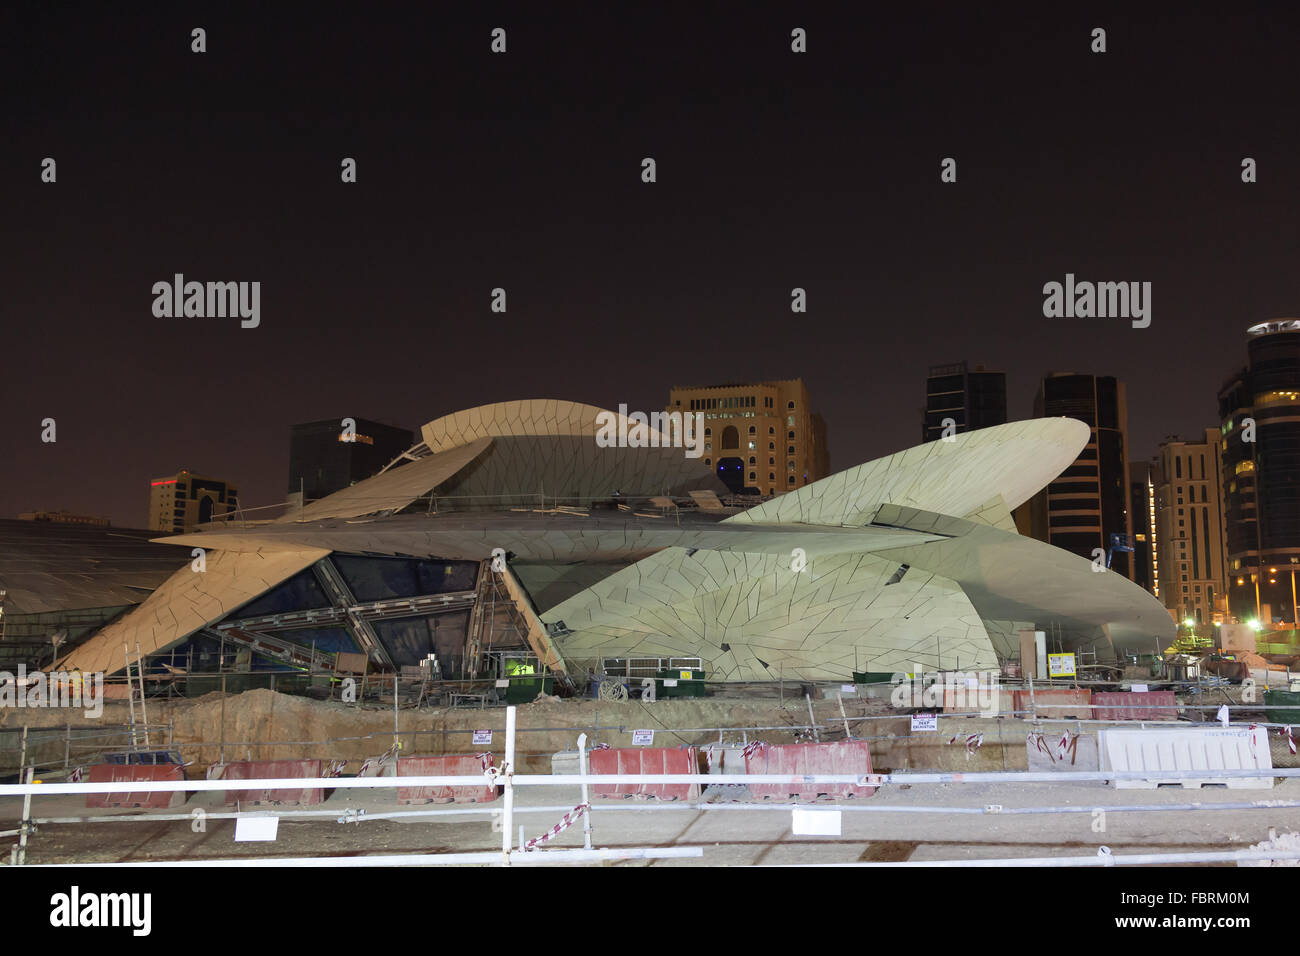 Qatar National Museum Construction Site Stock Photo